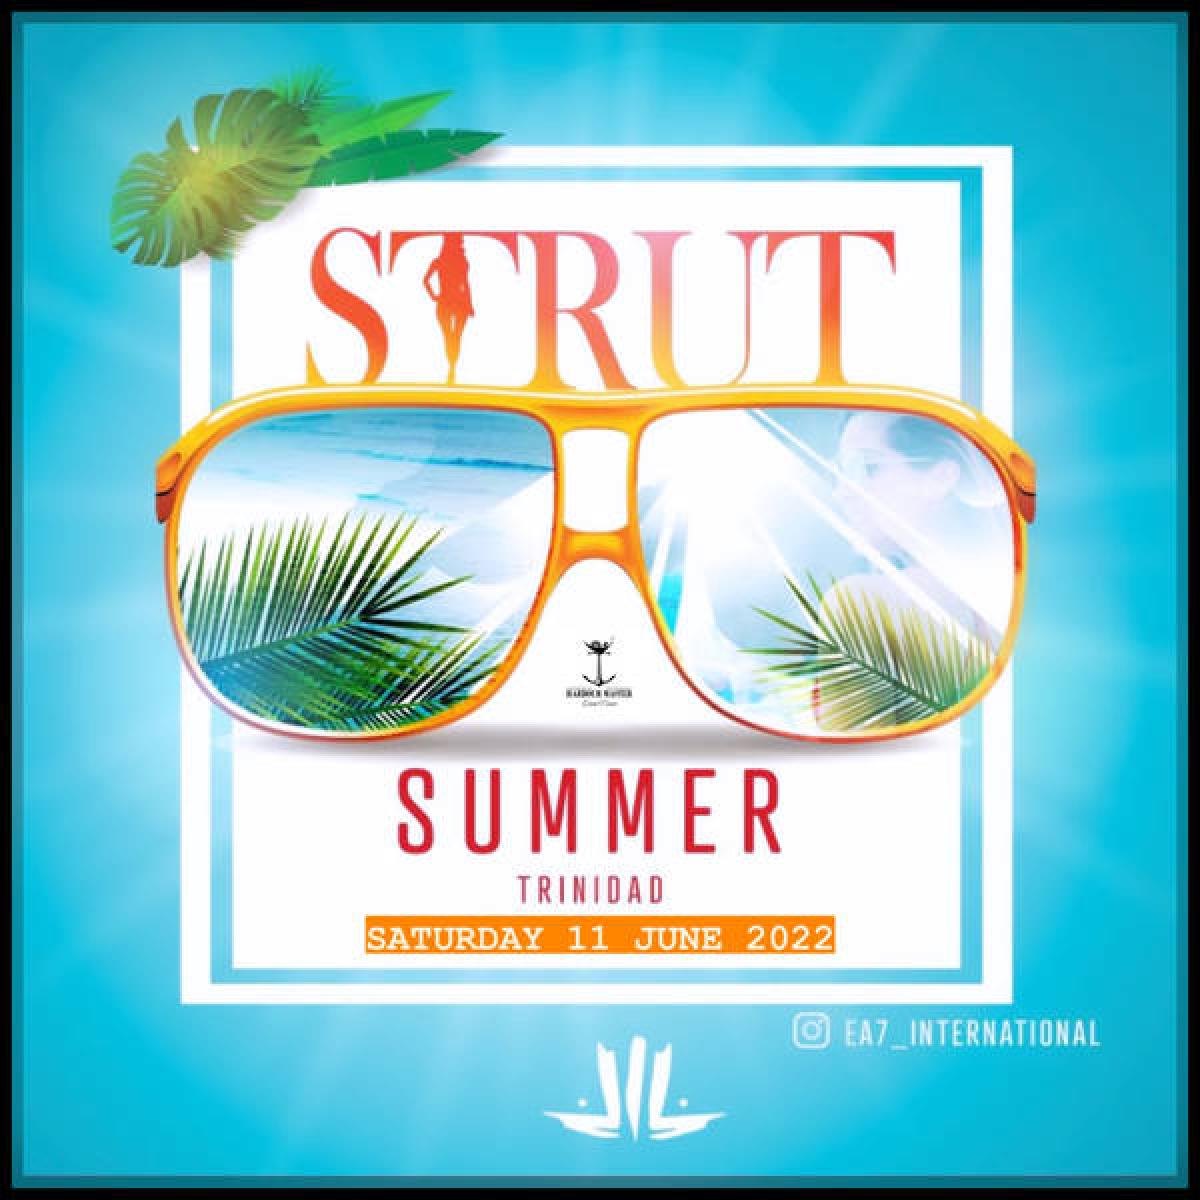 Strut Summer Trinidad 2022 flyer or graphic.